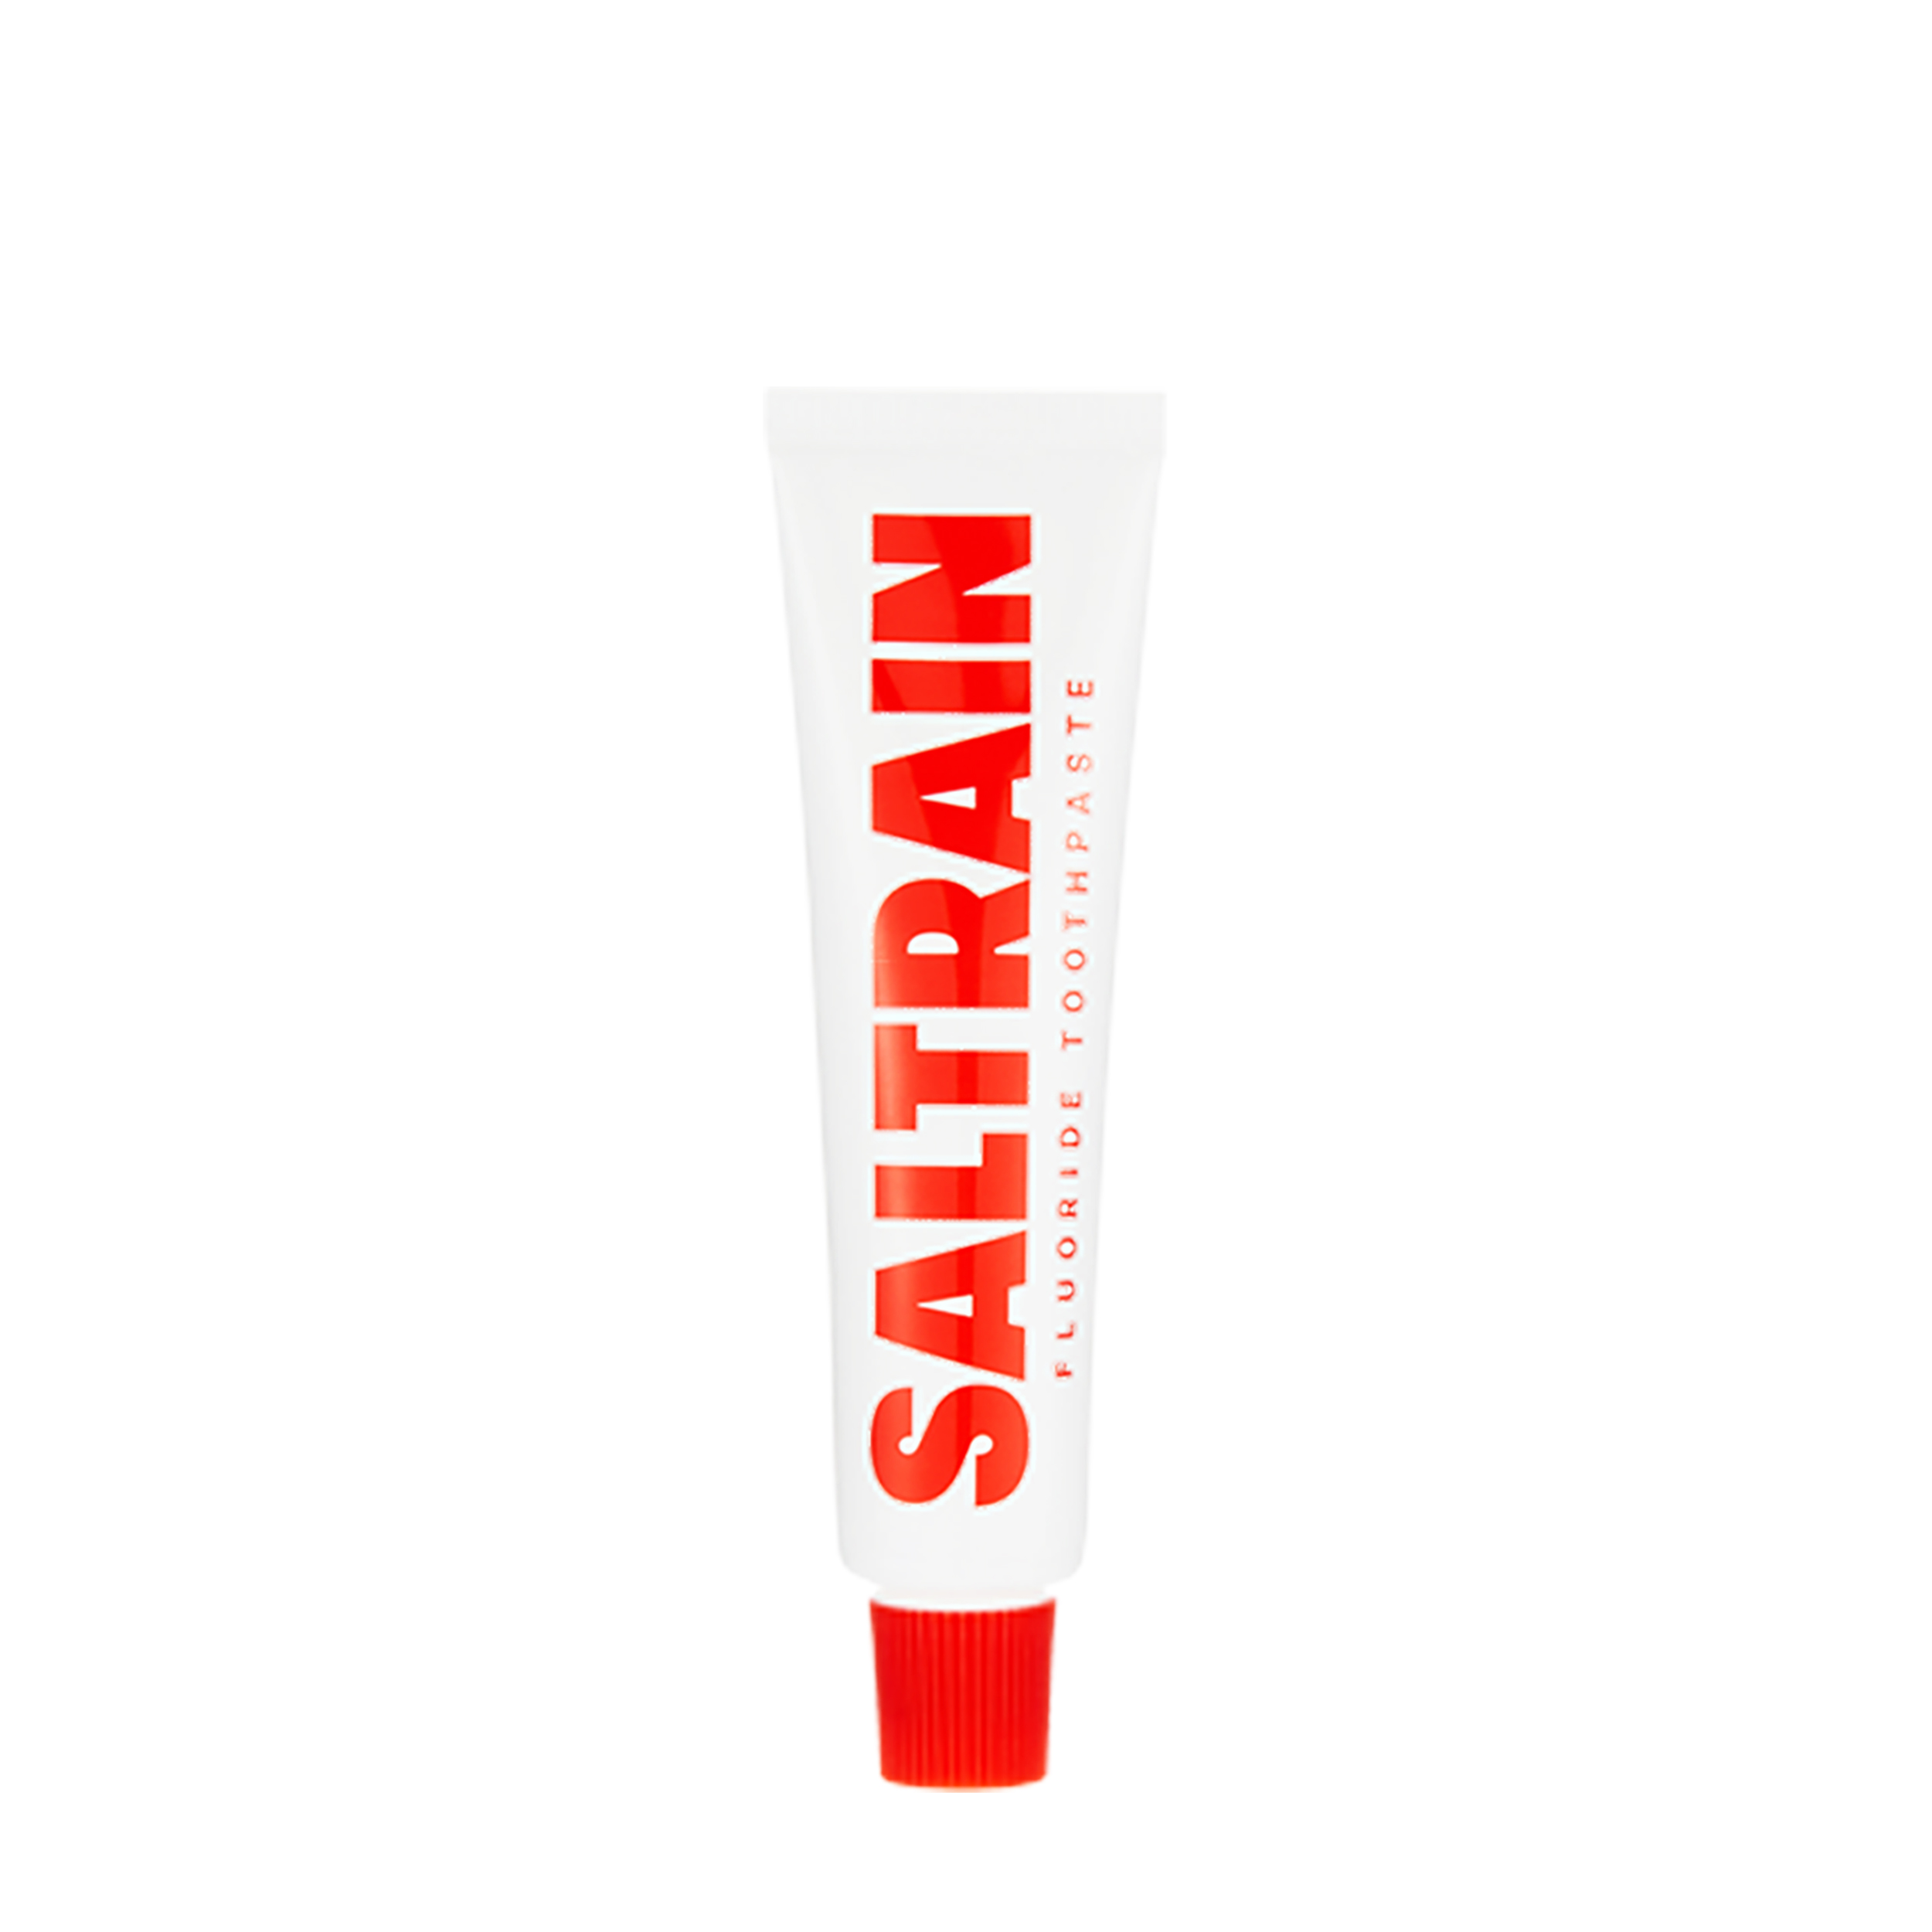 SALTRAIN SALTRAIN Мини-зубная паста для свежего дыхания 30 гр